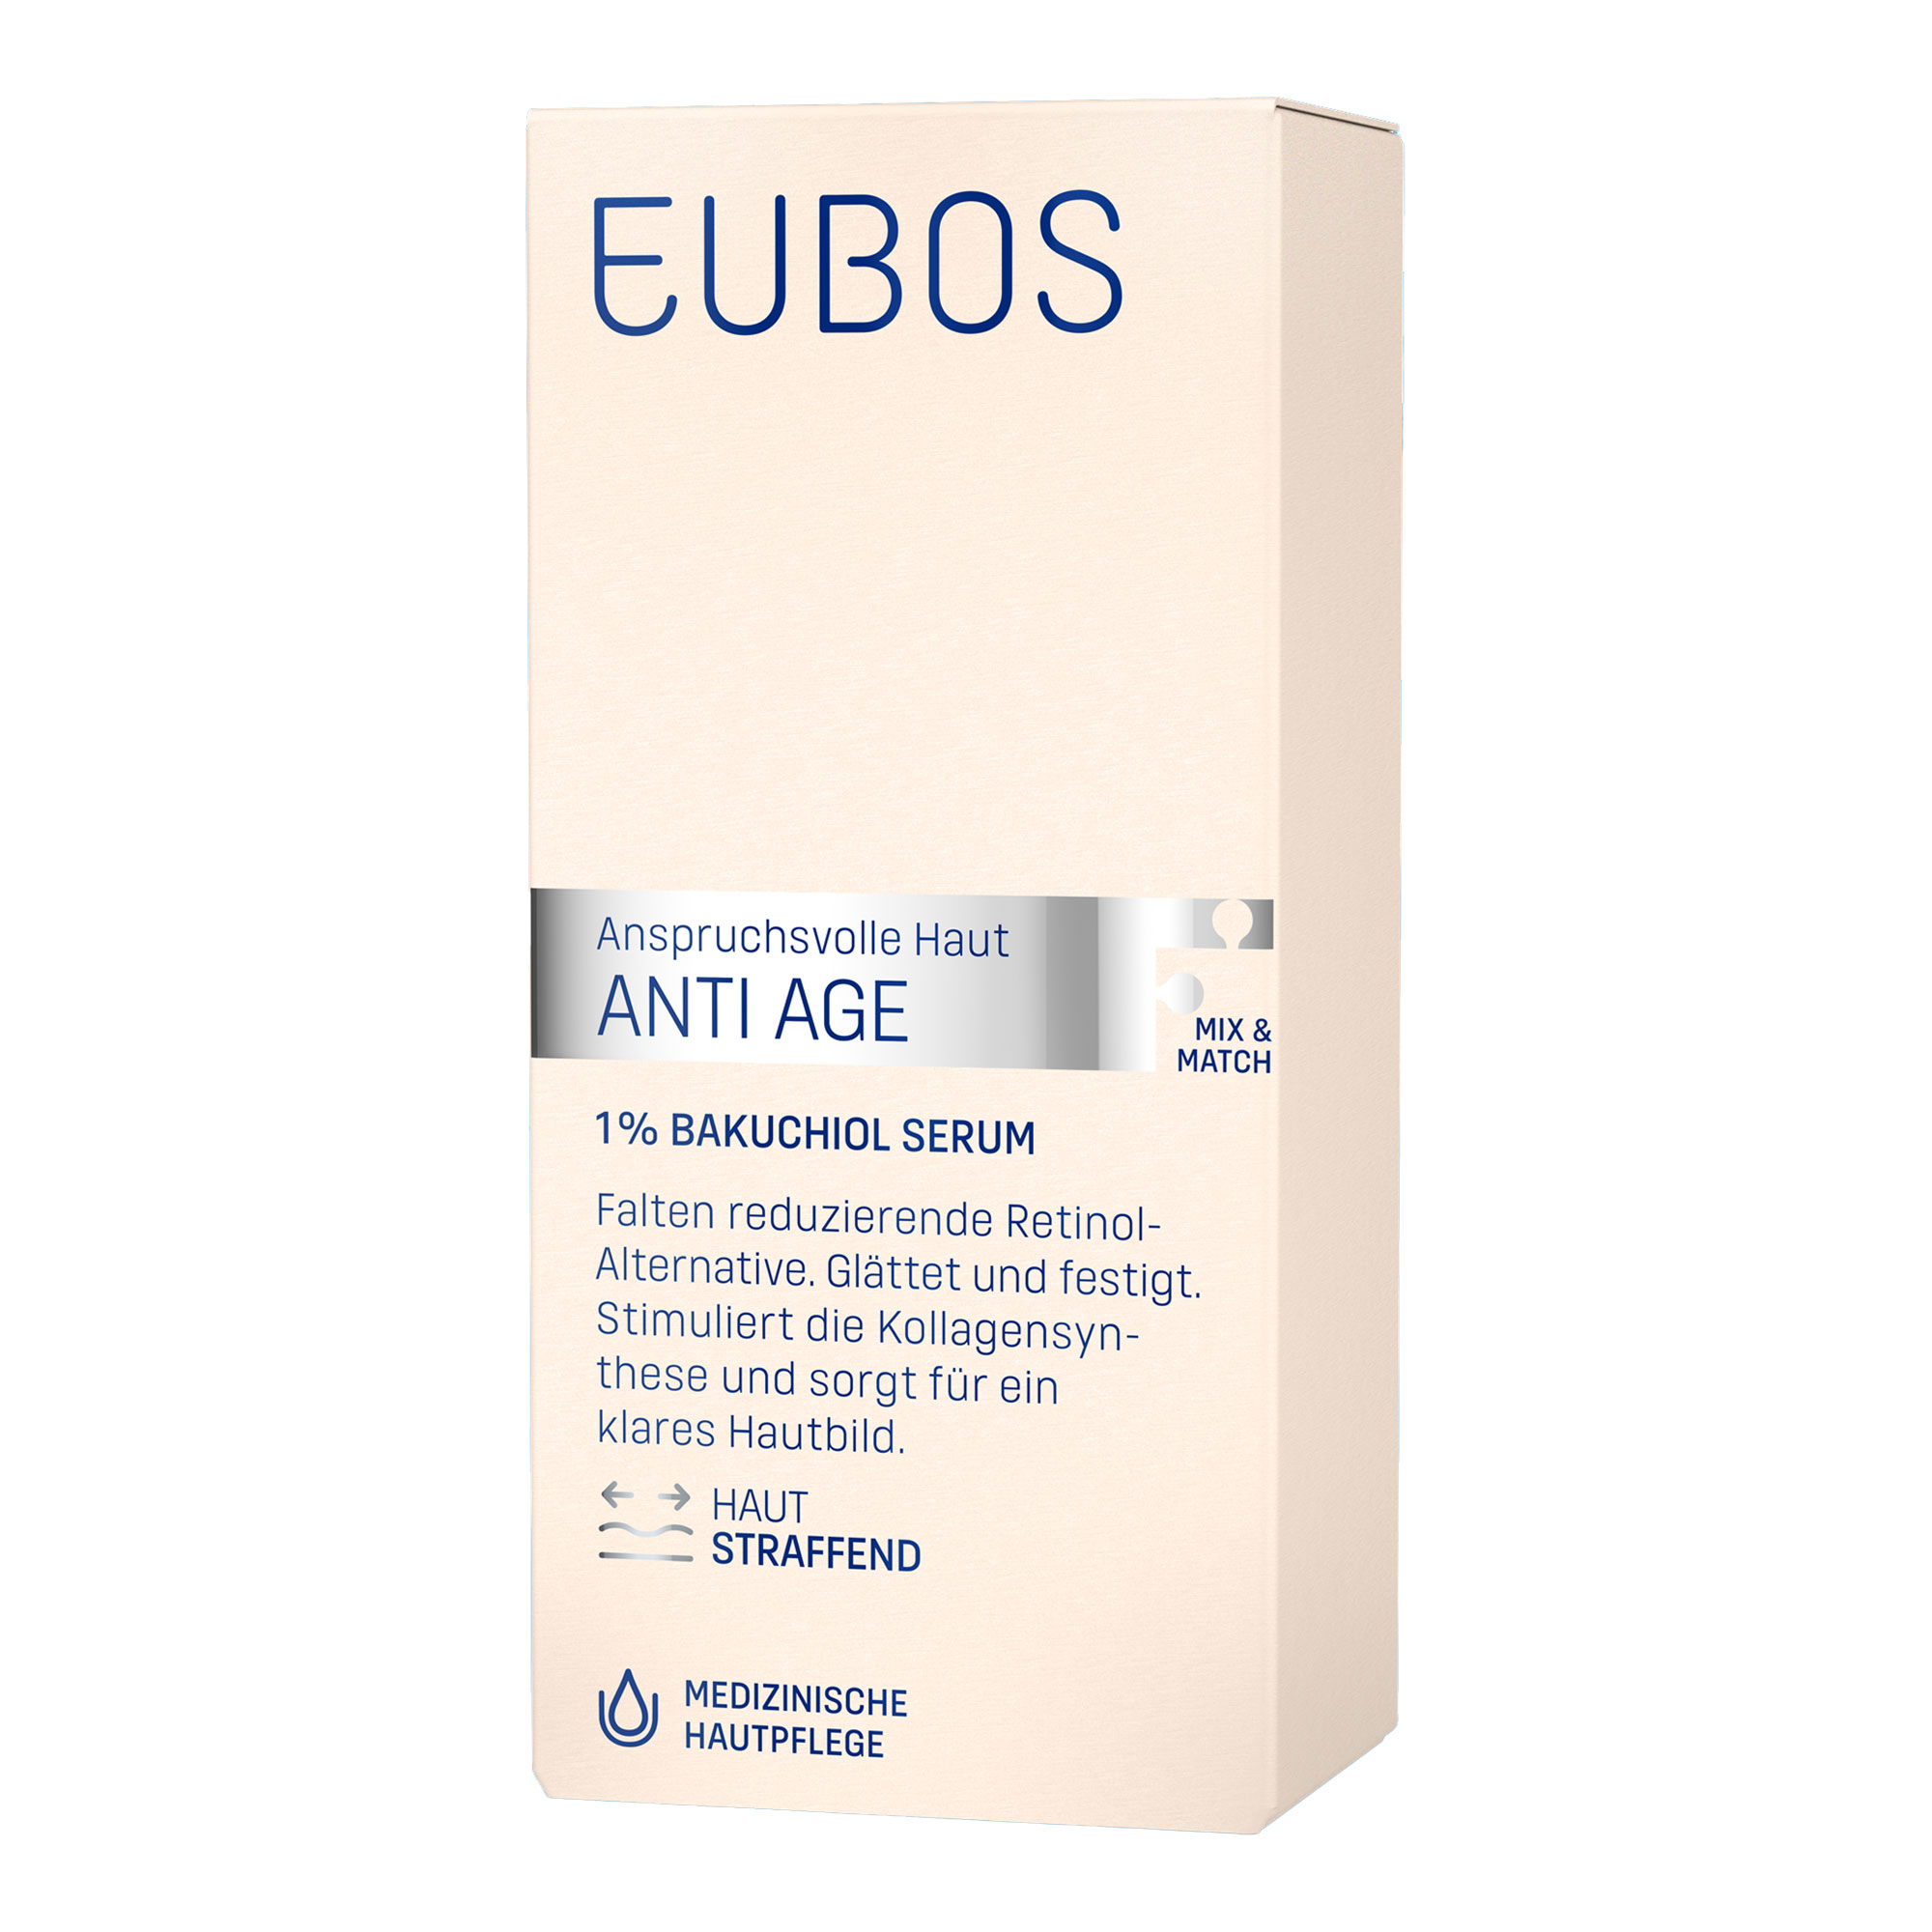 Eubos Anti Age 1% Bakuchiol Serum Verpackung